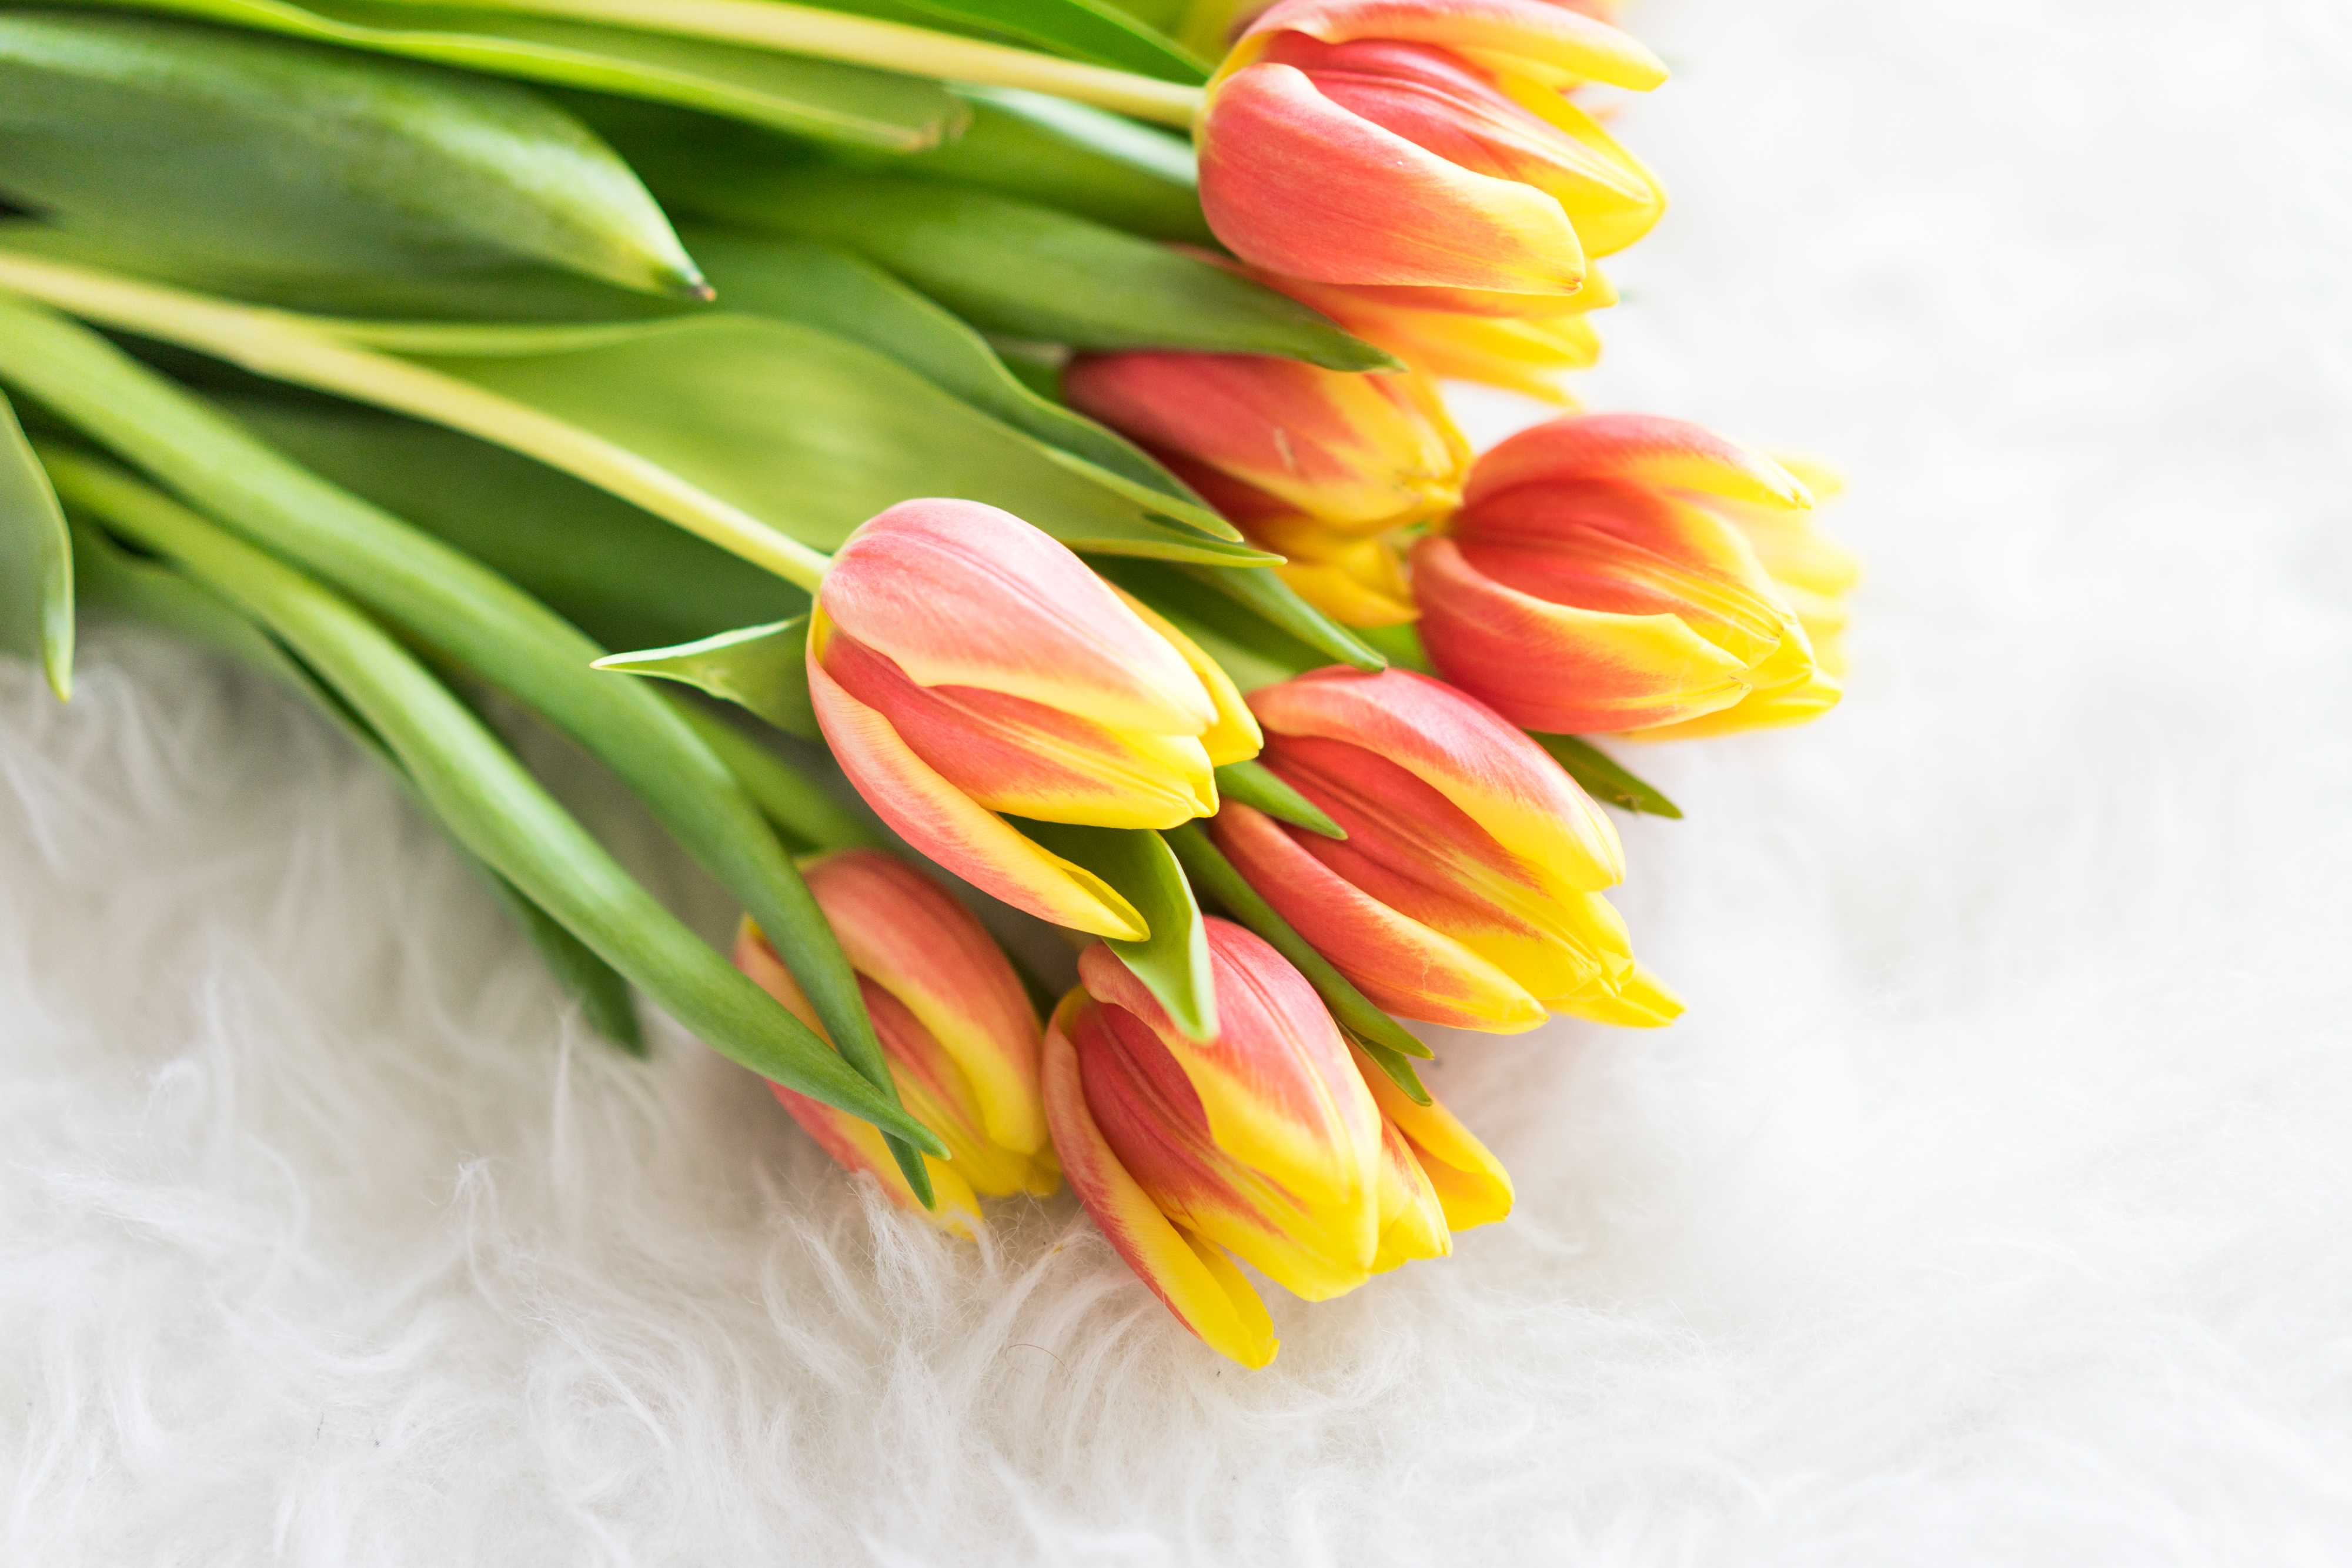 bouquet-of-kees-nelis-tulips-on-white-synthetic-pelt-picjumbo-com.jpg